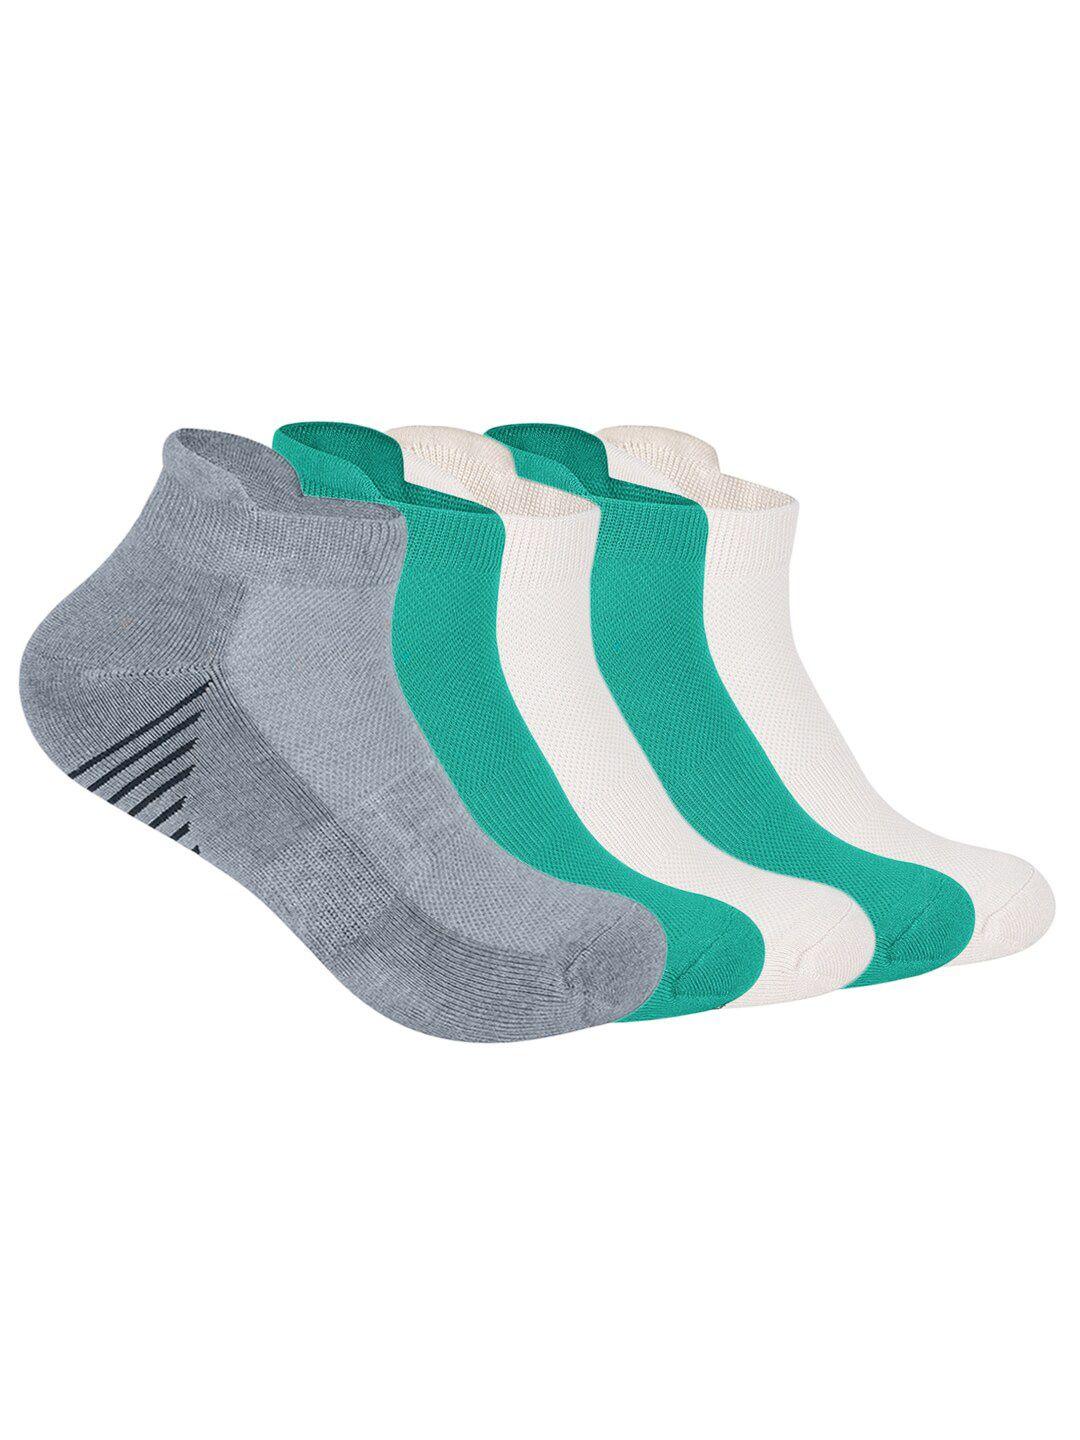 mint & oak pack of 5 patterned ankle length socks